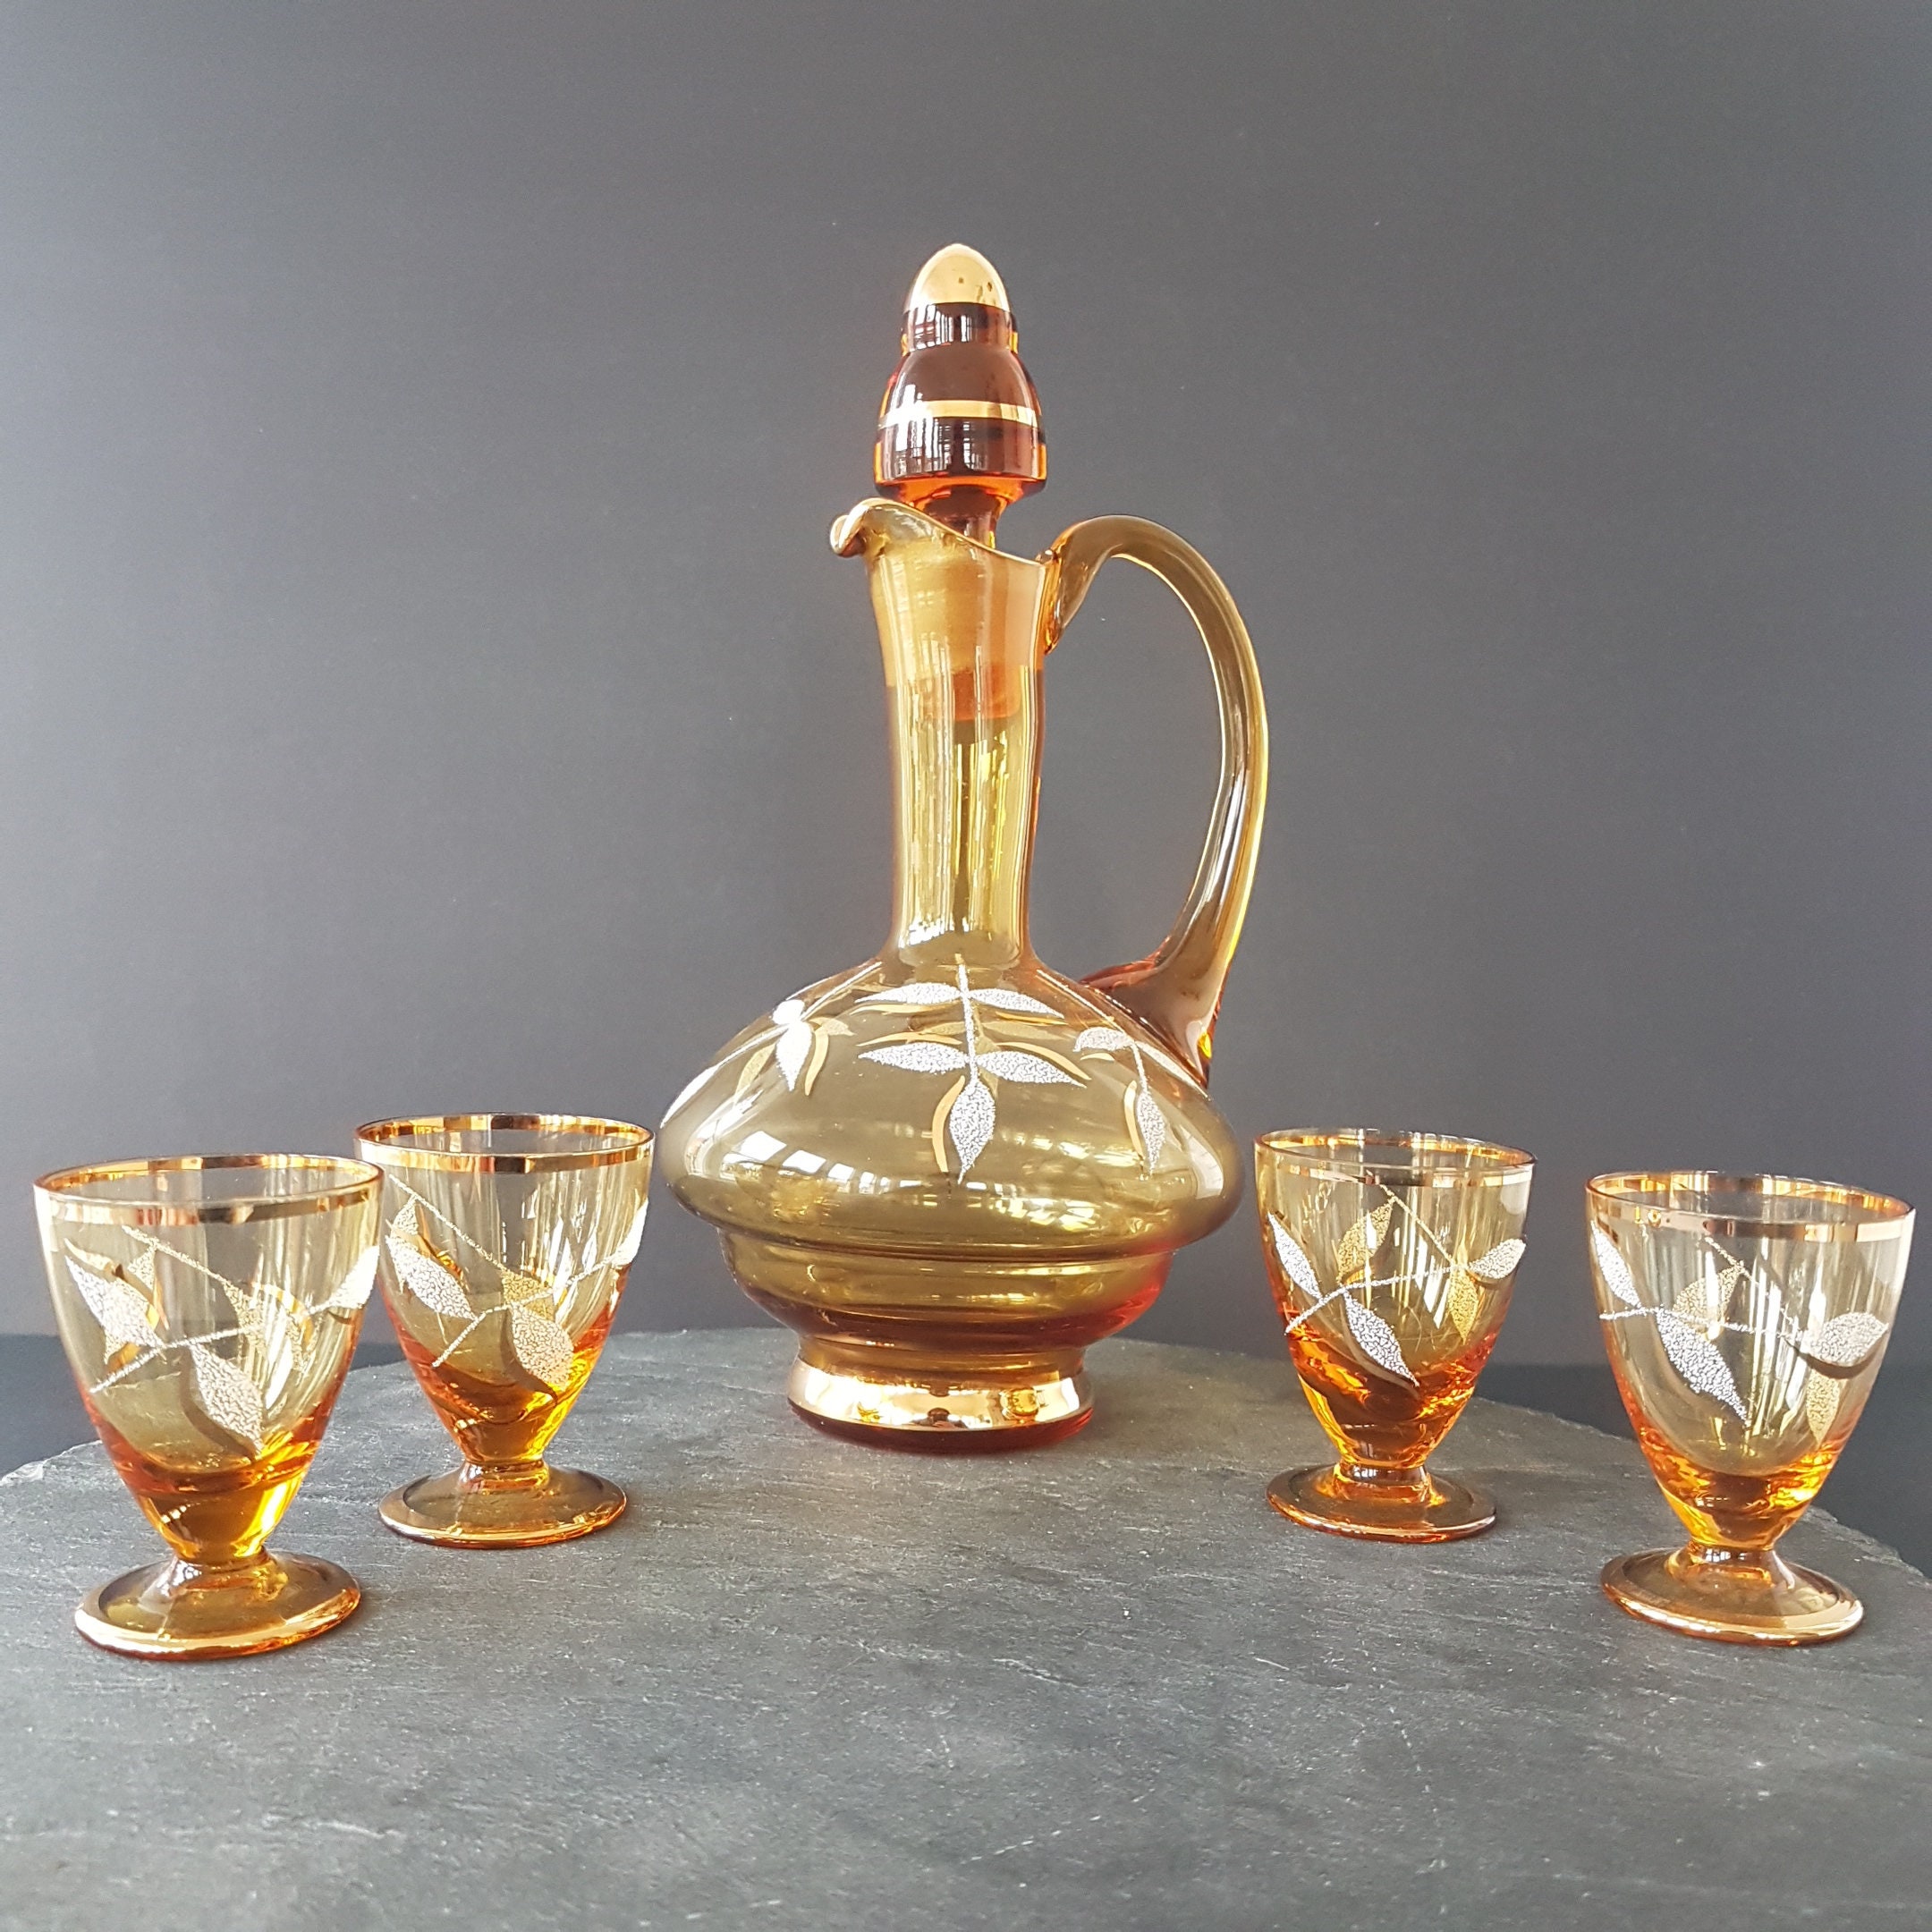 Vintage Decanter Set Amber Glass Decanter With 4 Shot